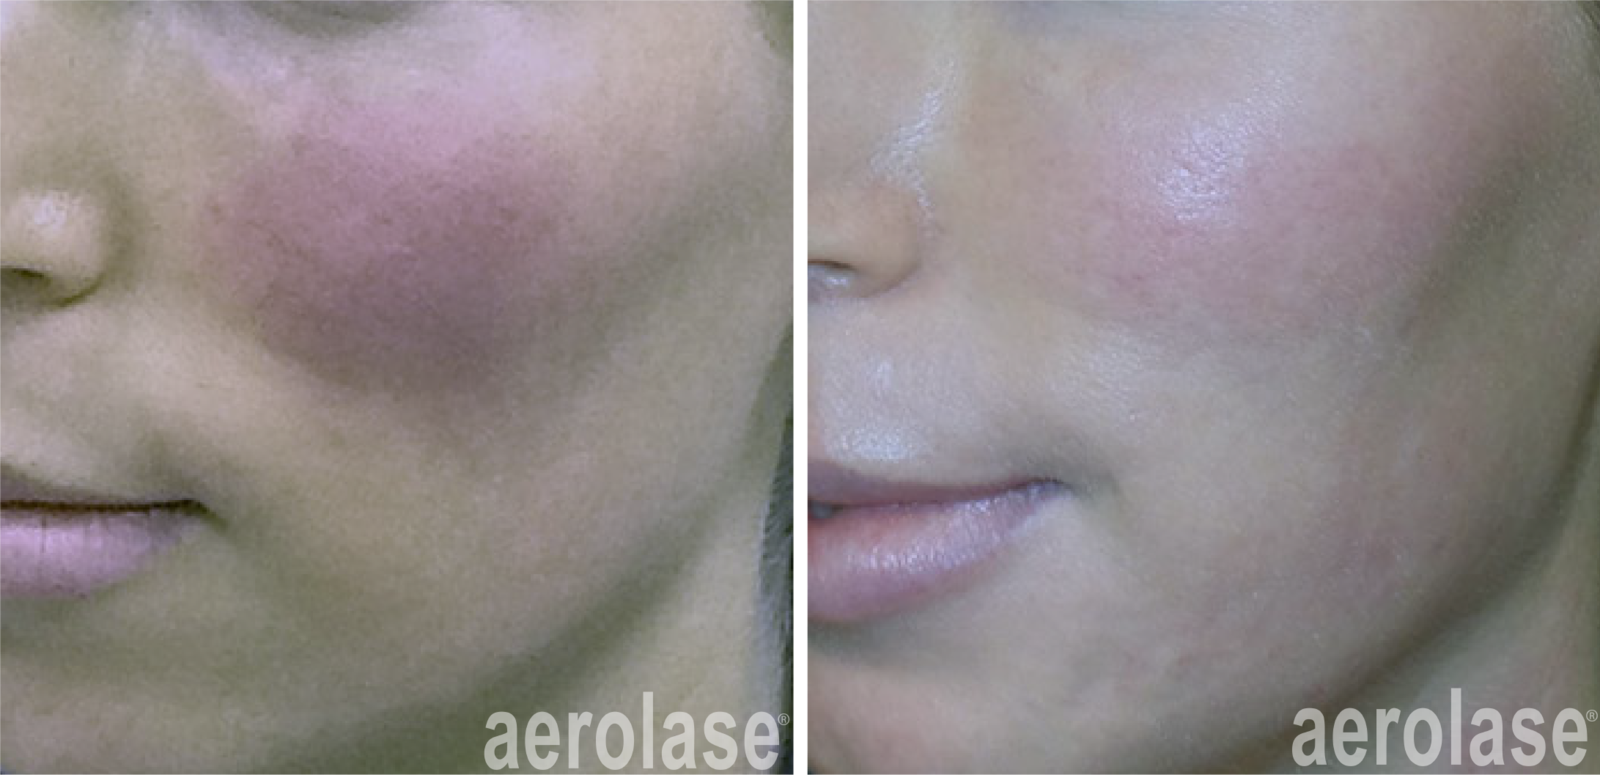 reducing skin redness with aerolase laser skin resurfacing and treatments